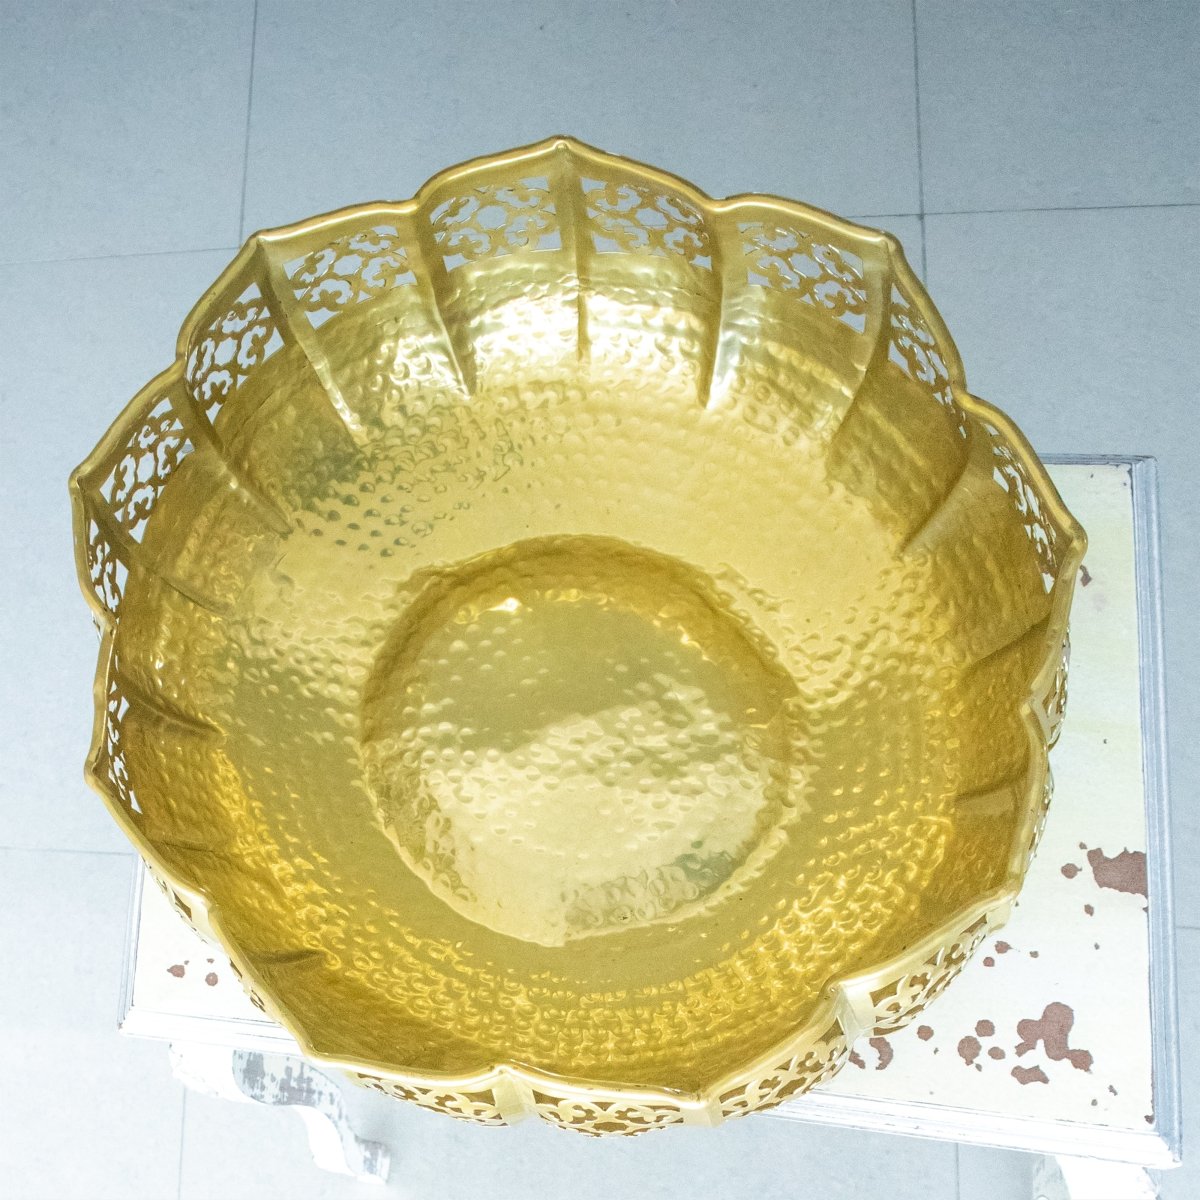 Kezevel Metal Decorative Urli Bowl - Golden Finish Traditional Handcrafted Urli Bowl for Flowers and Candles, Urli Pots